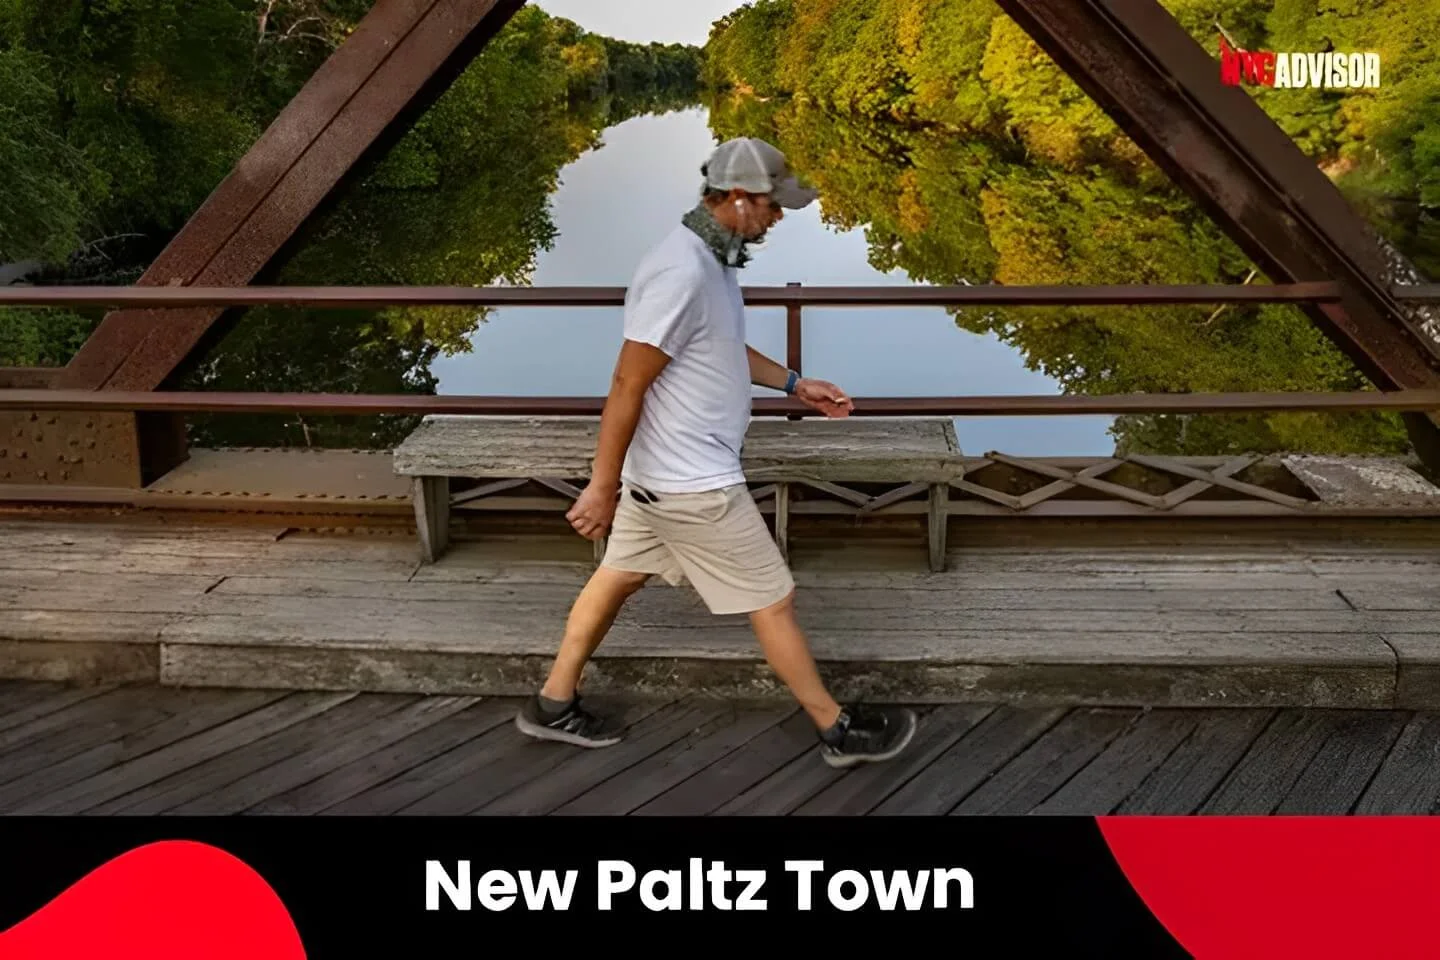 New Paltz Town in New York